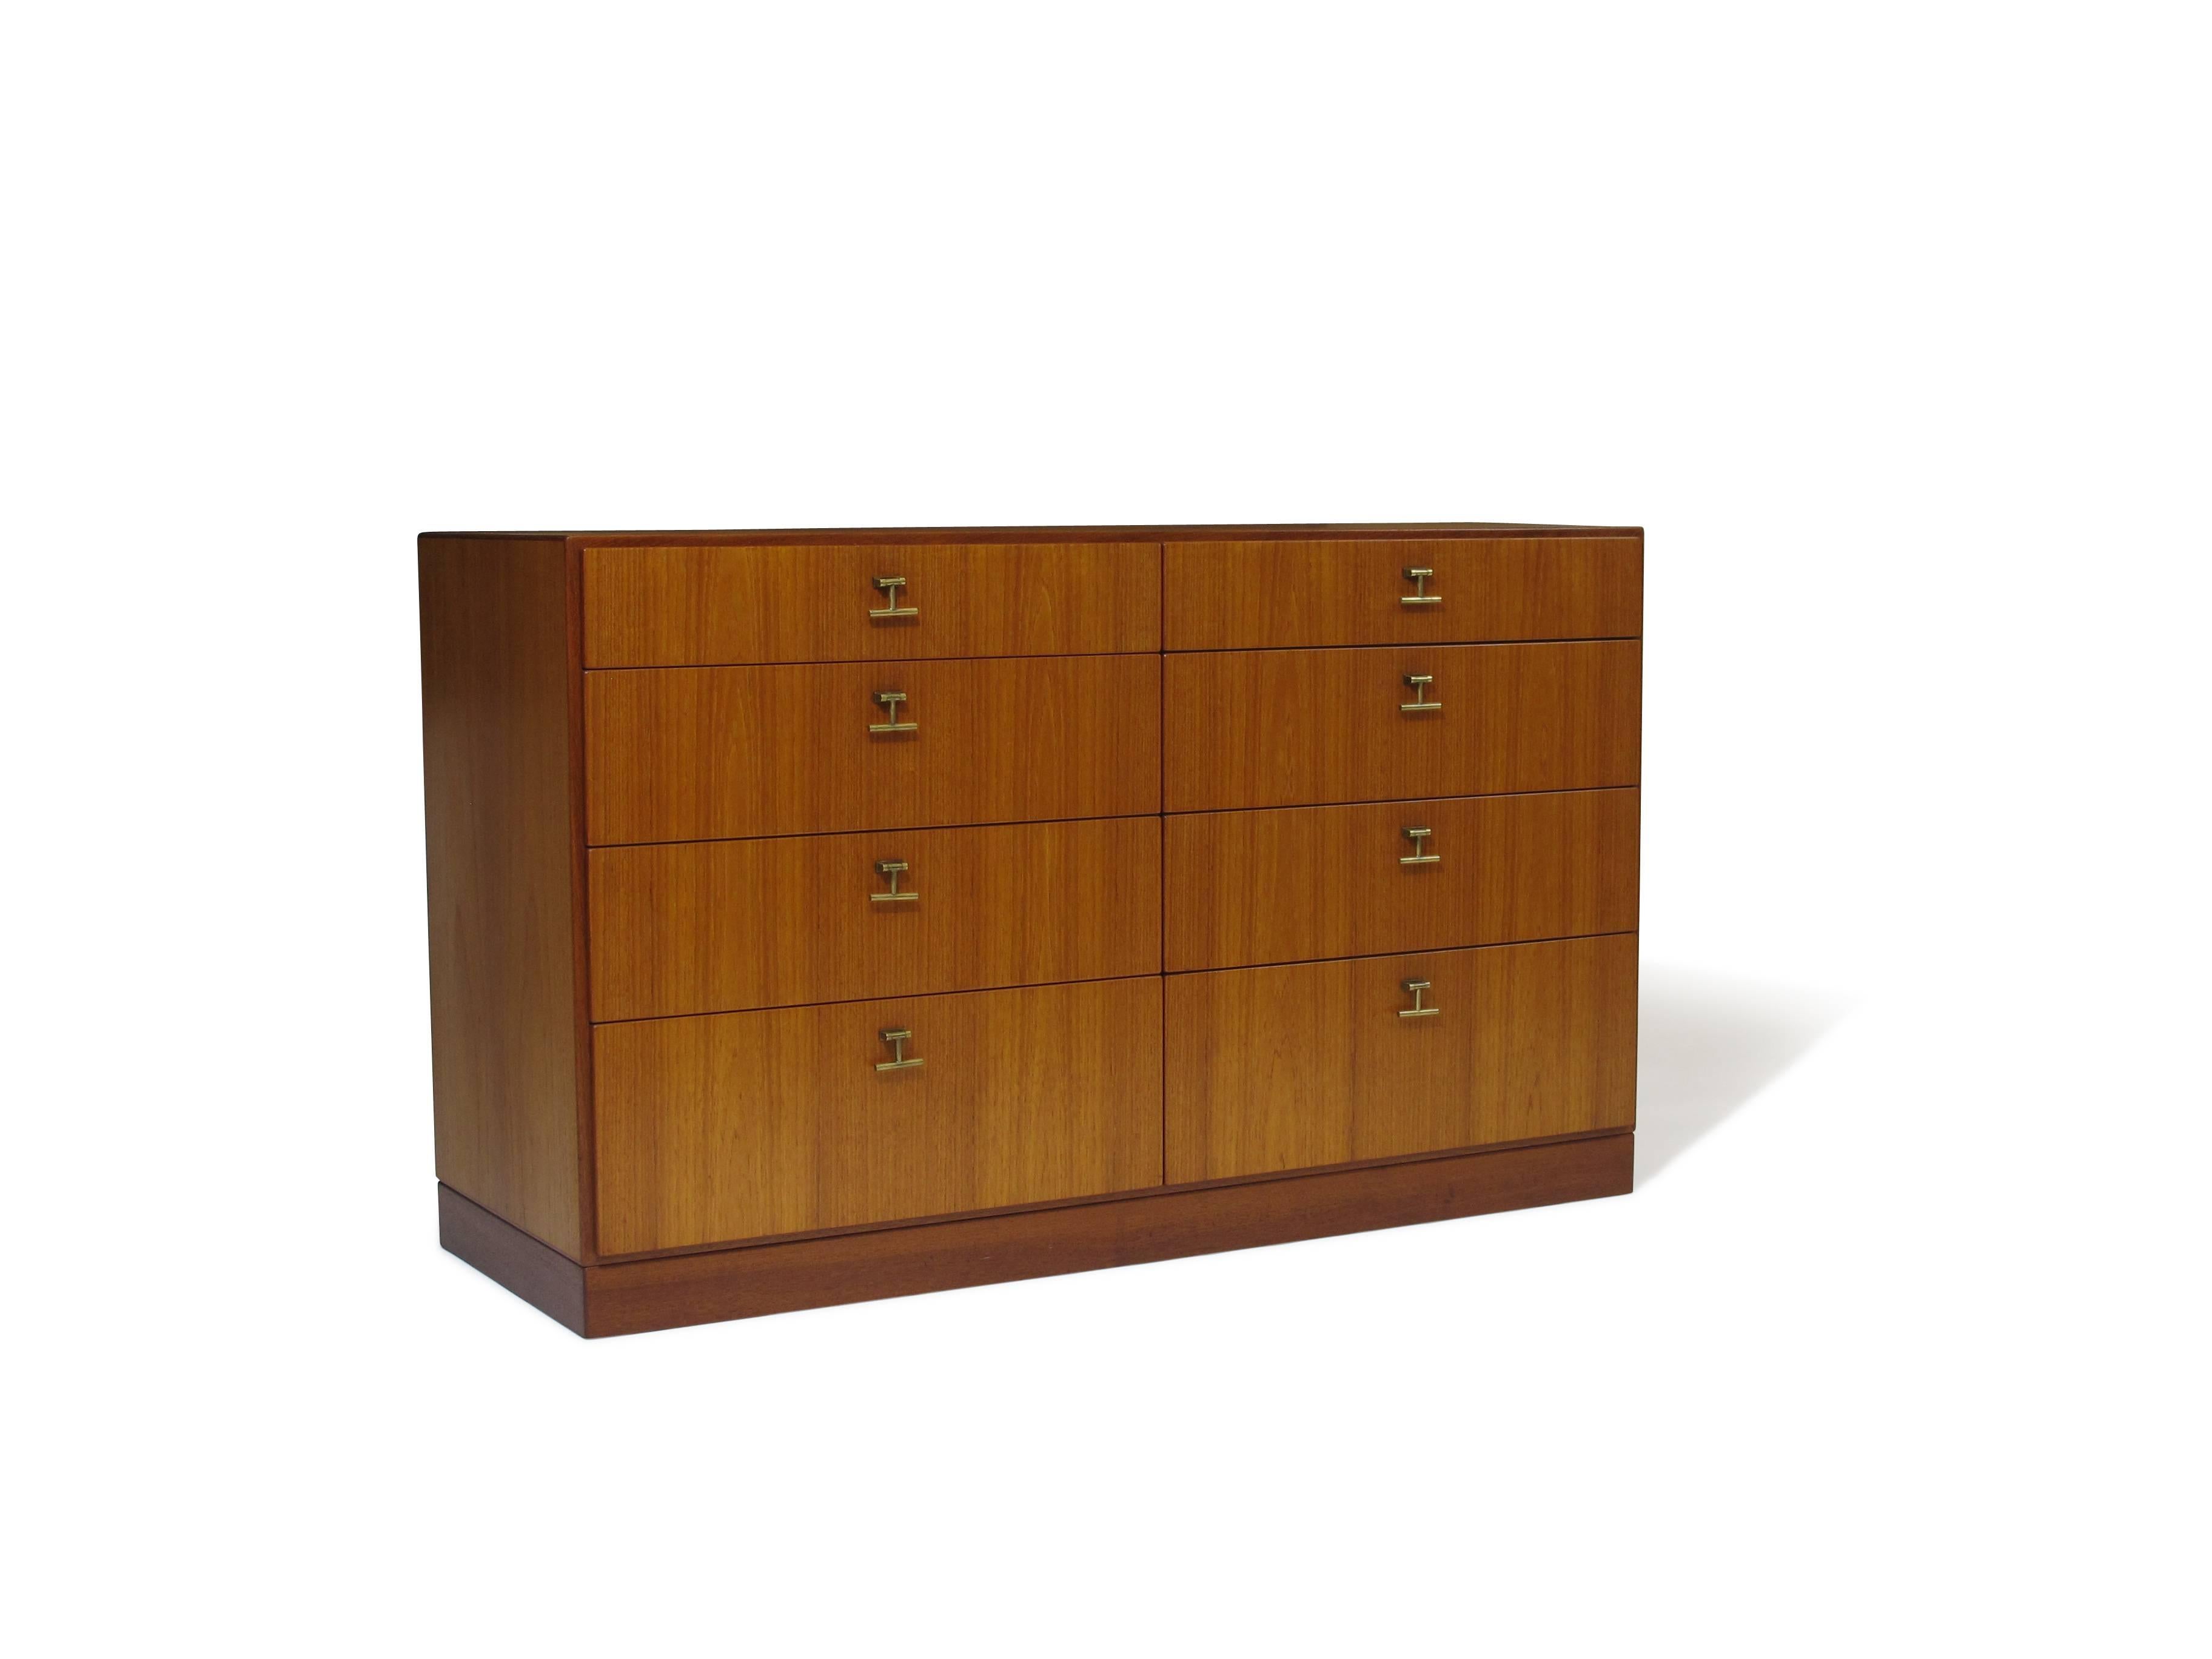 Borge Mogensen eight-drawer teak dresser with brass pulls on plinth base manufactured by CM Madsen for FDB mobler.